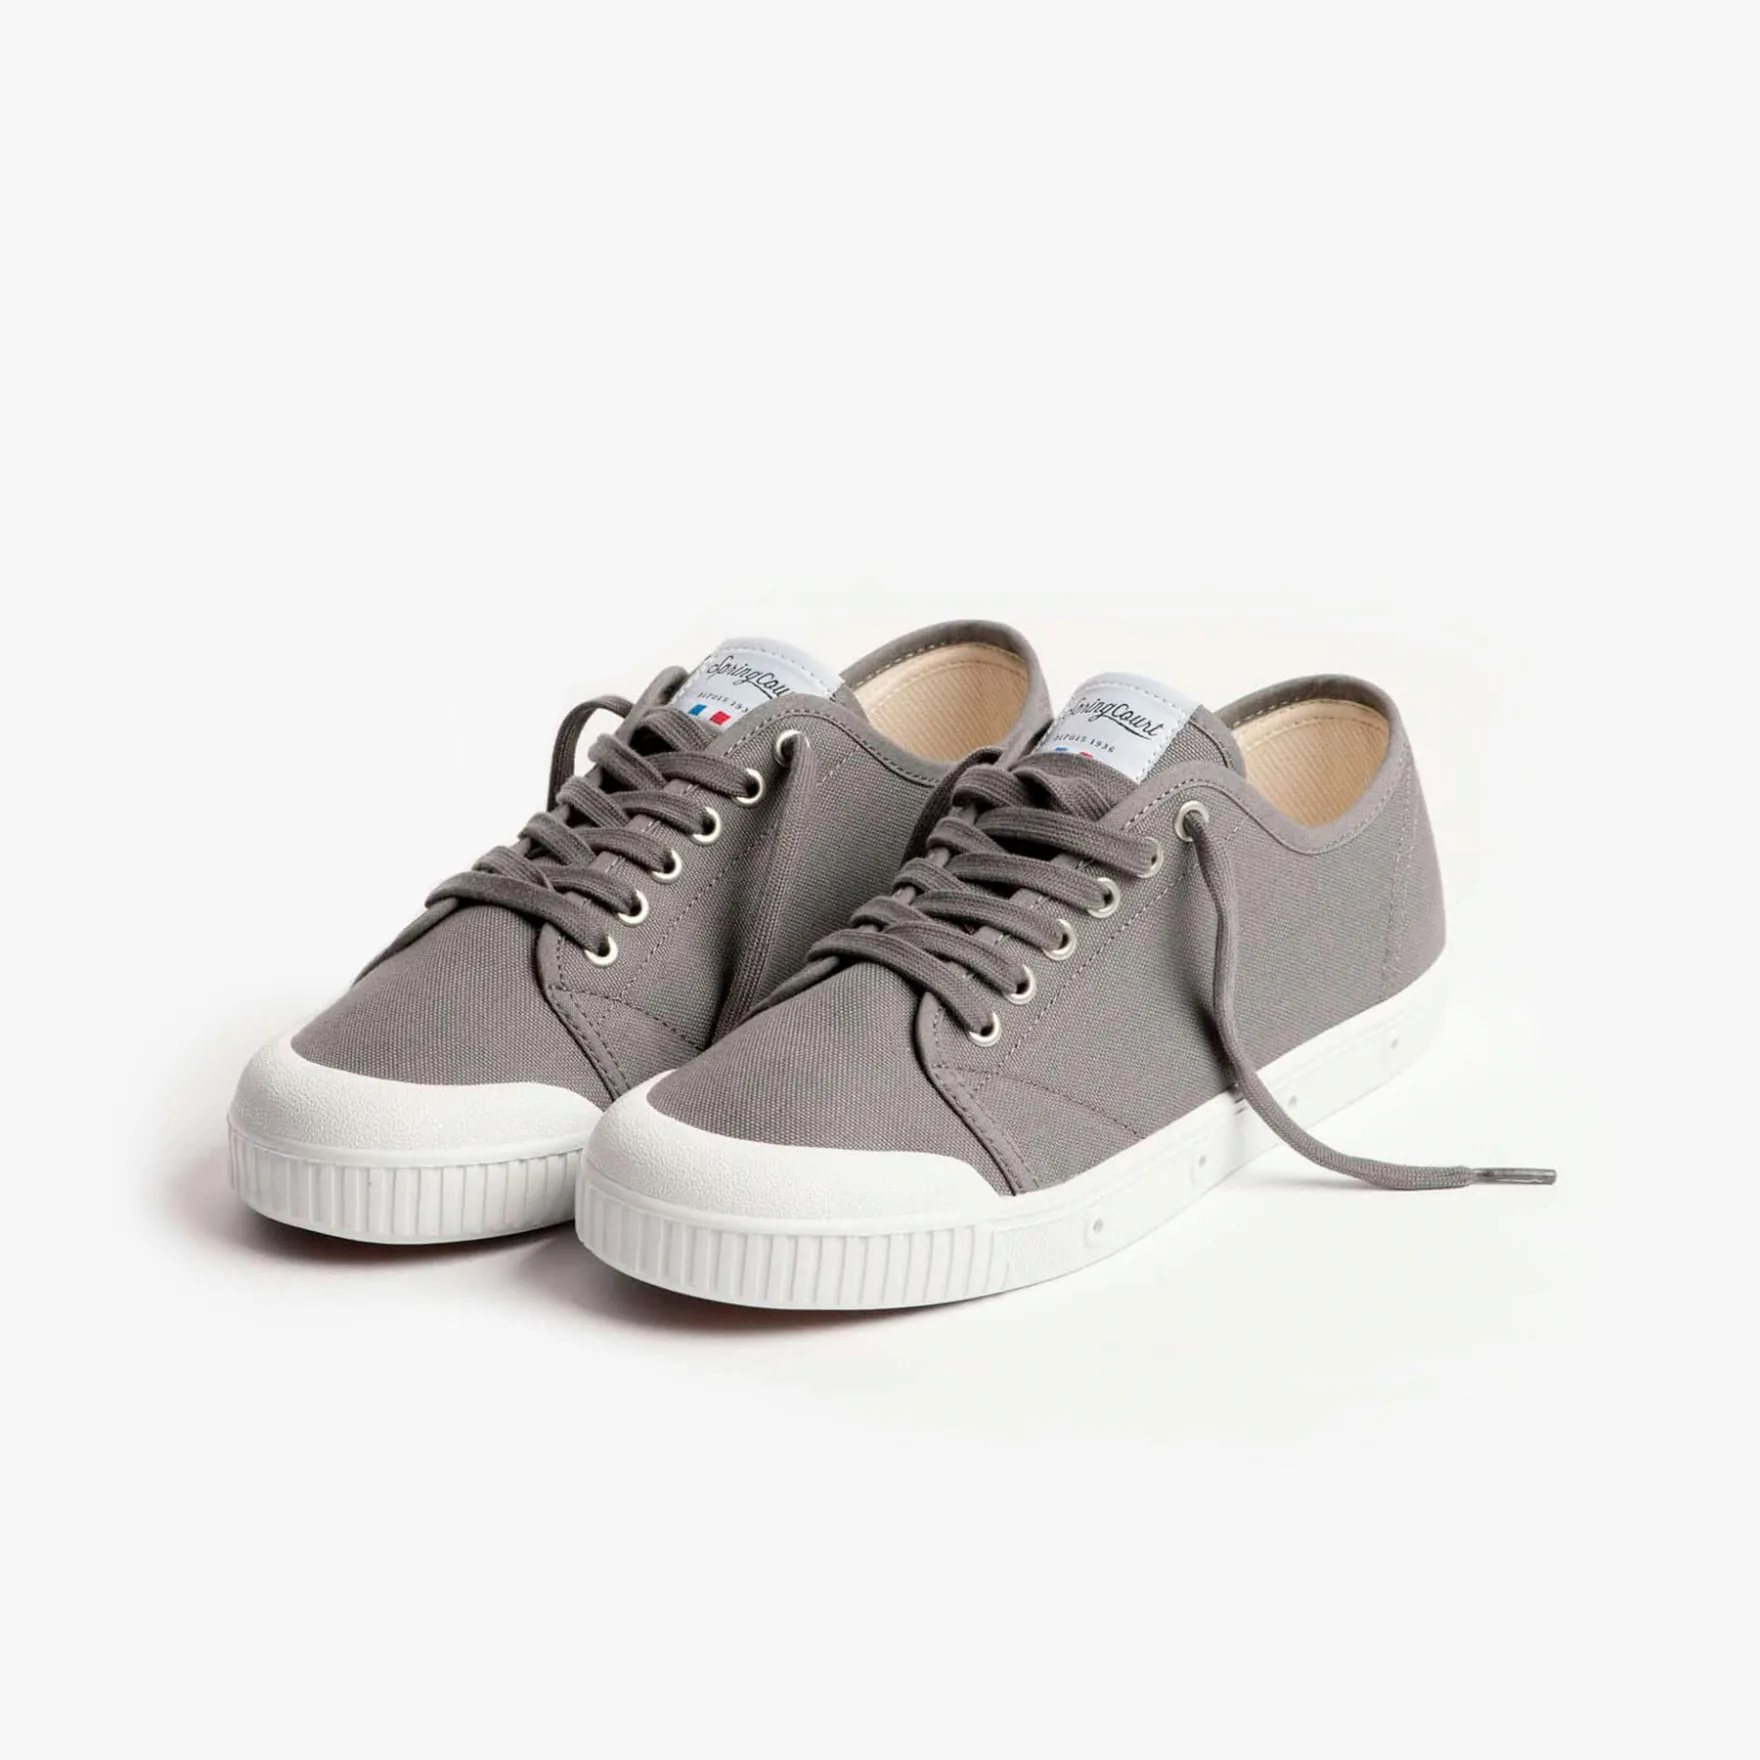 dark grey low top sneakers